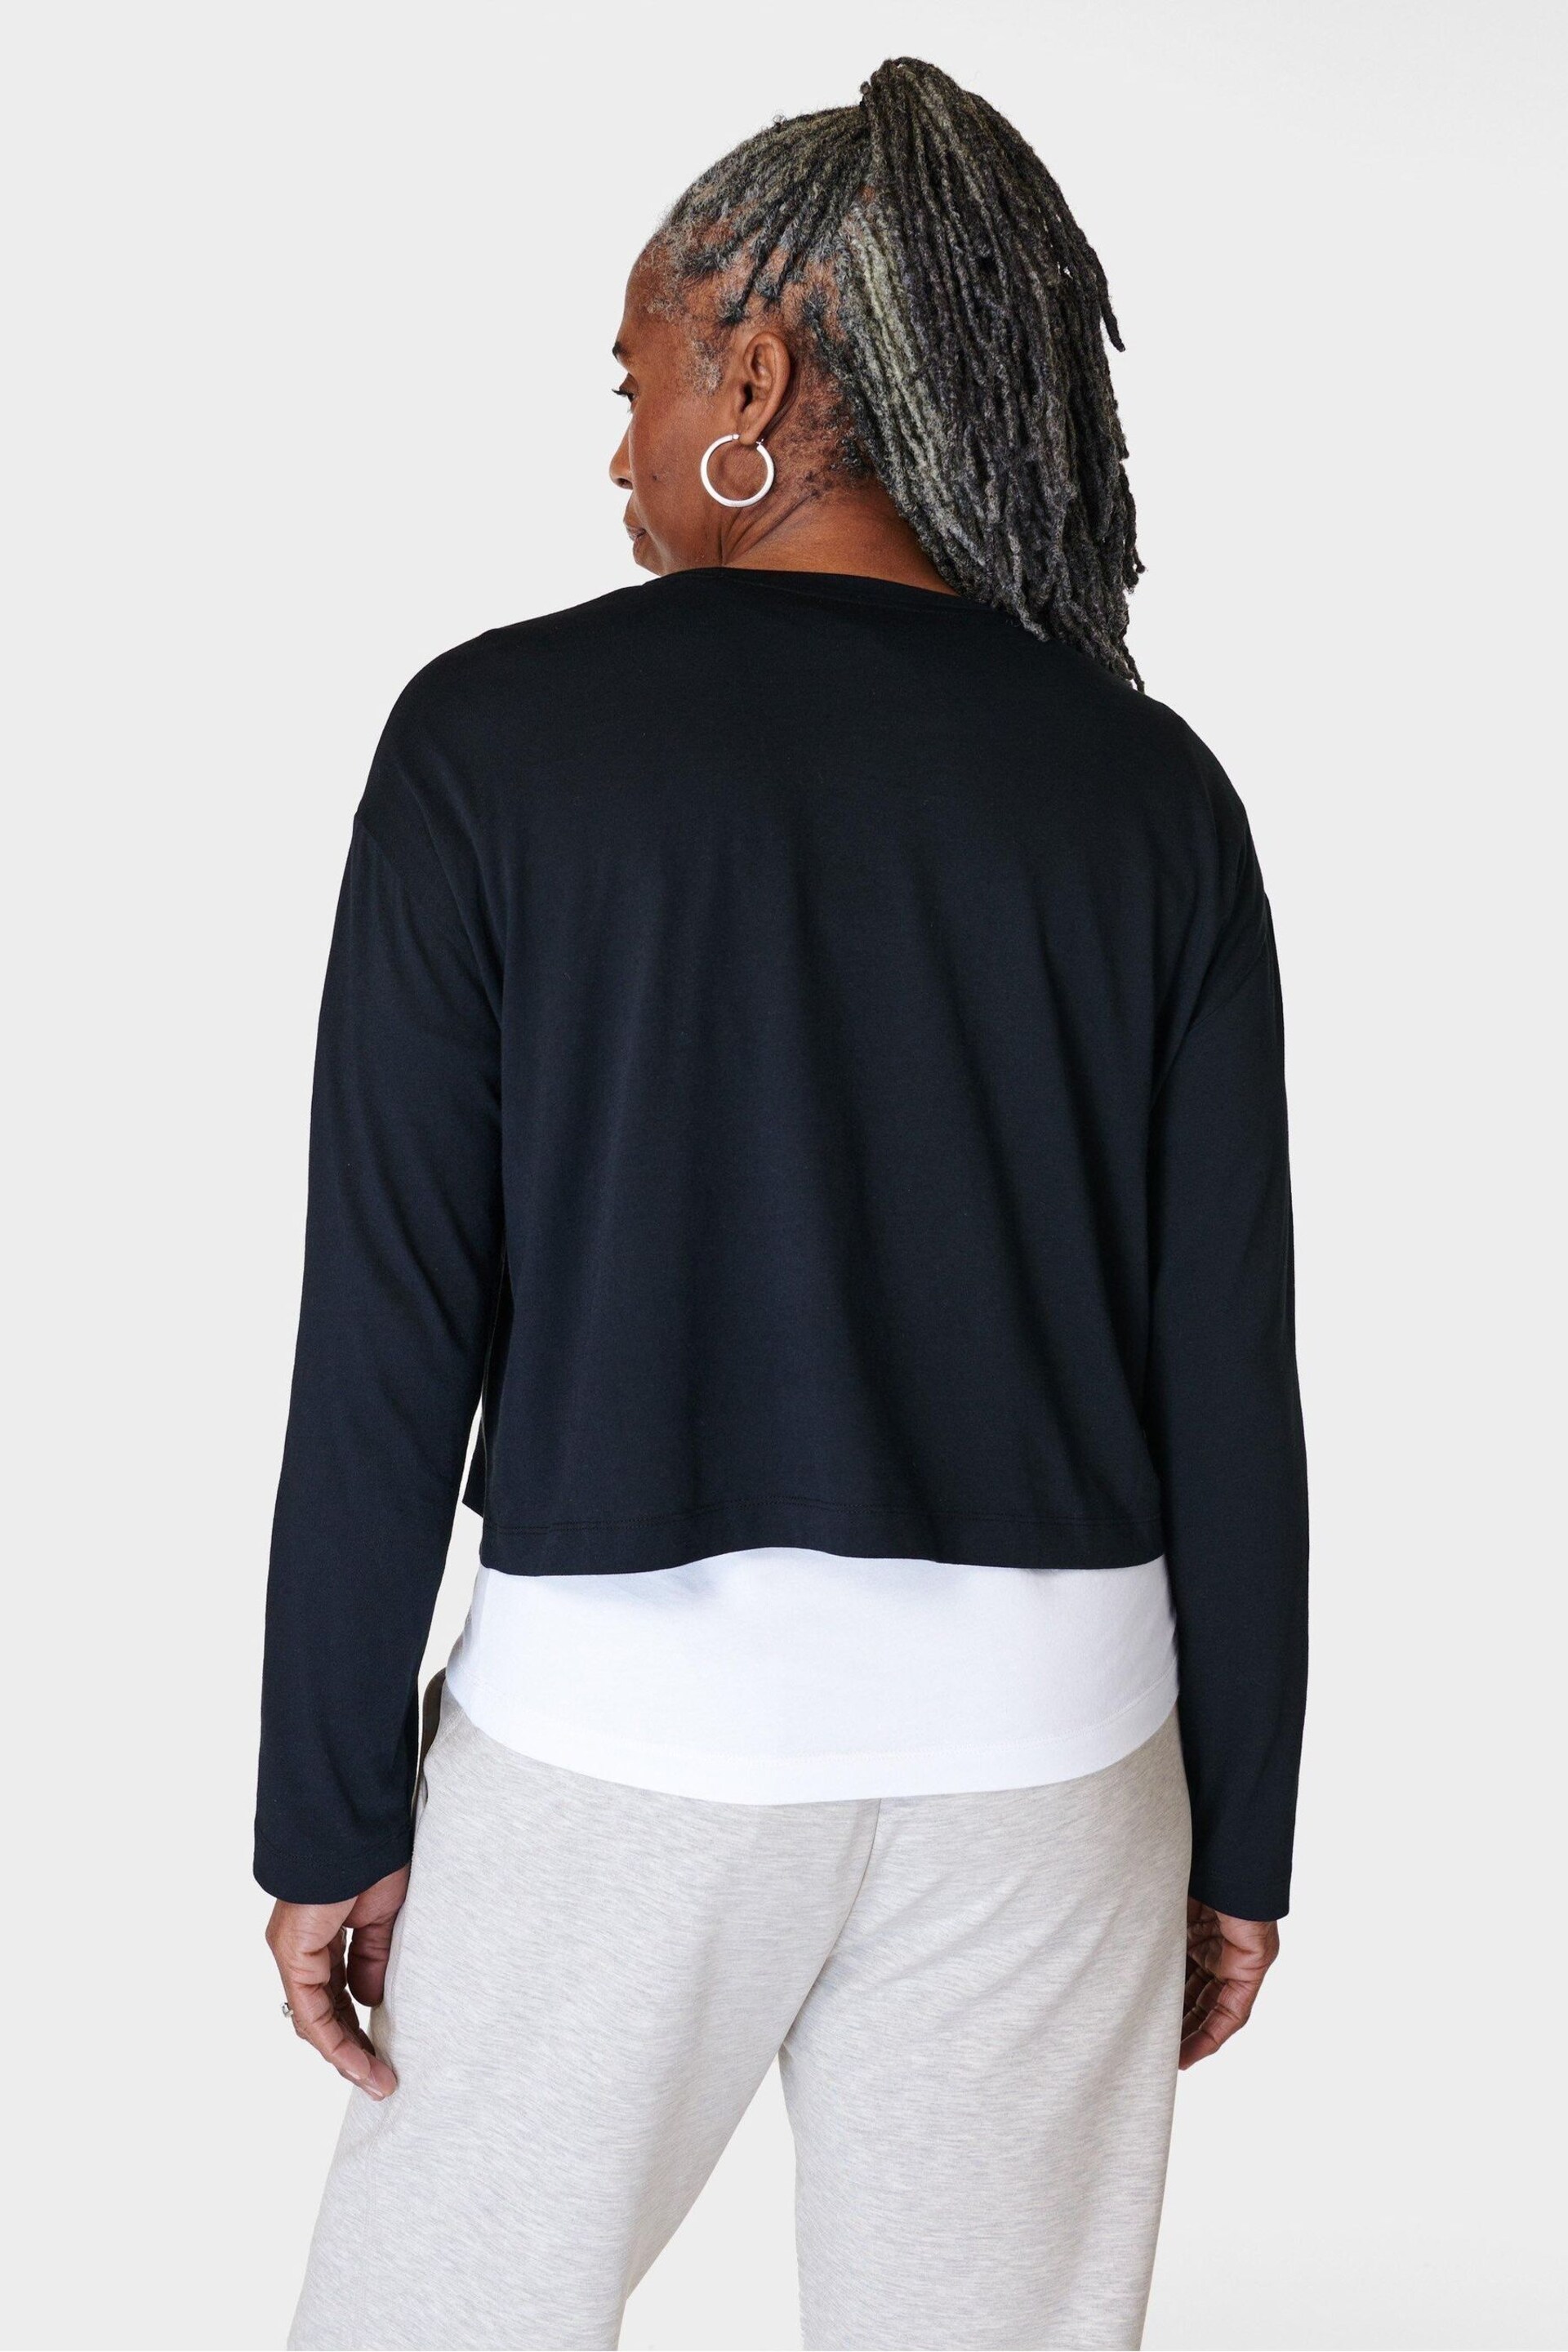 Sweaty Betty Black Essential Crop Long Sleeve T-Shirt - Image 2 of 7